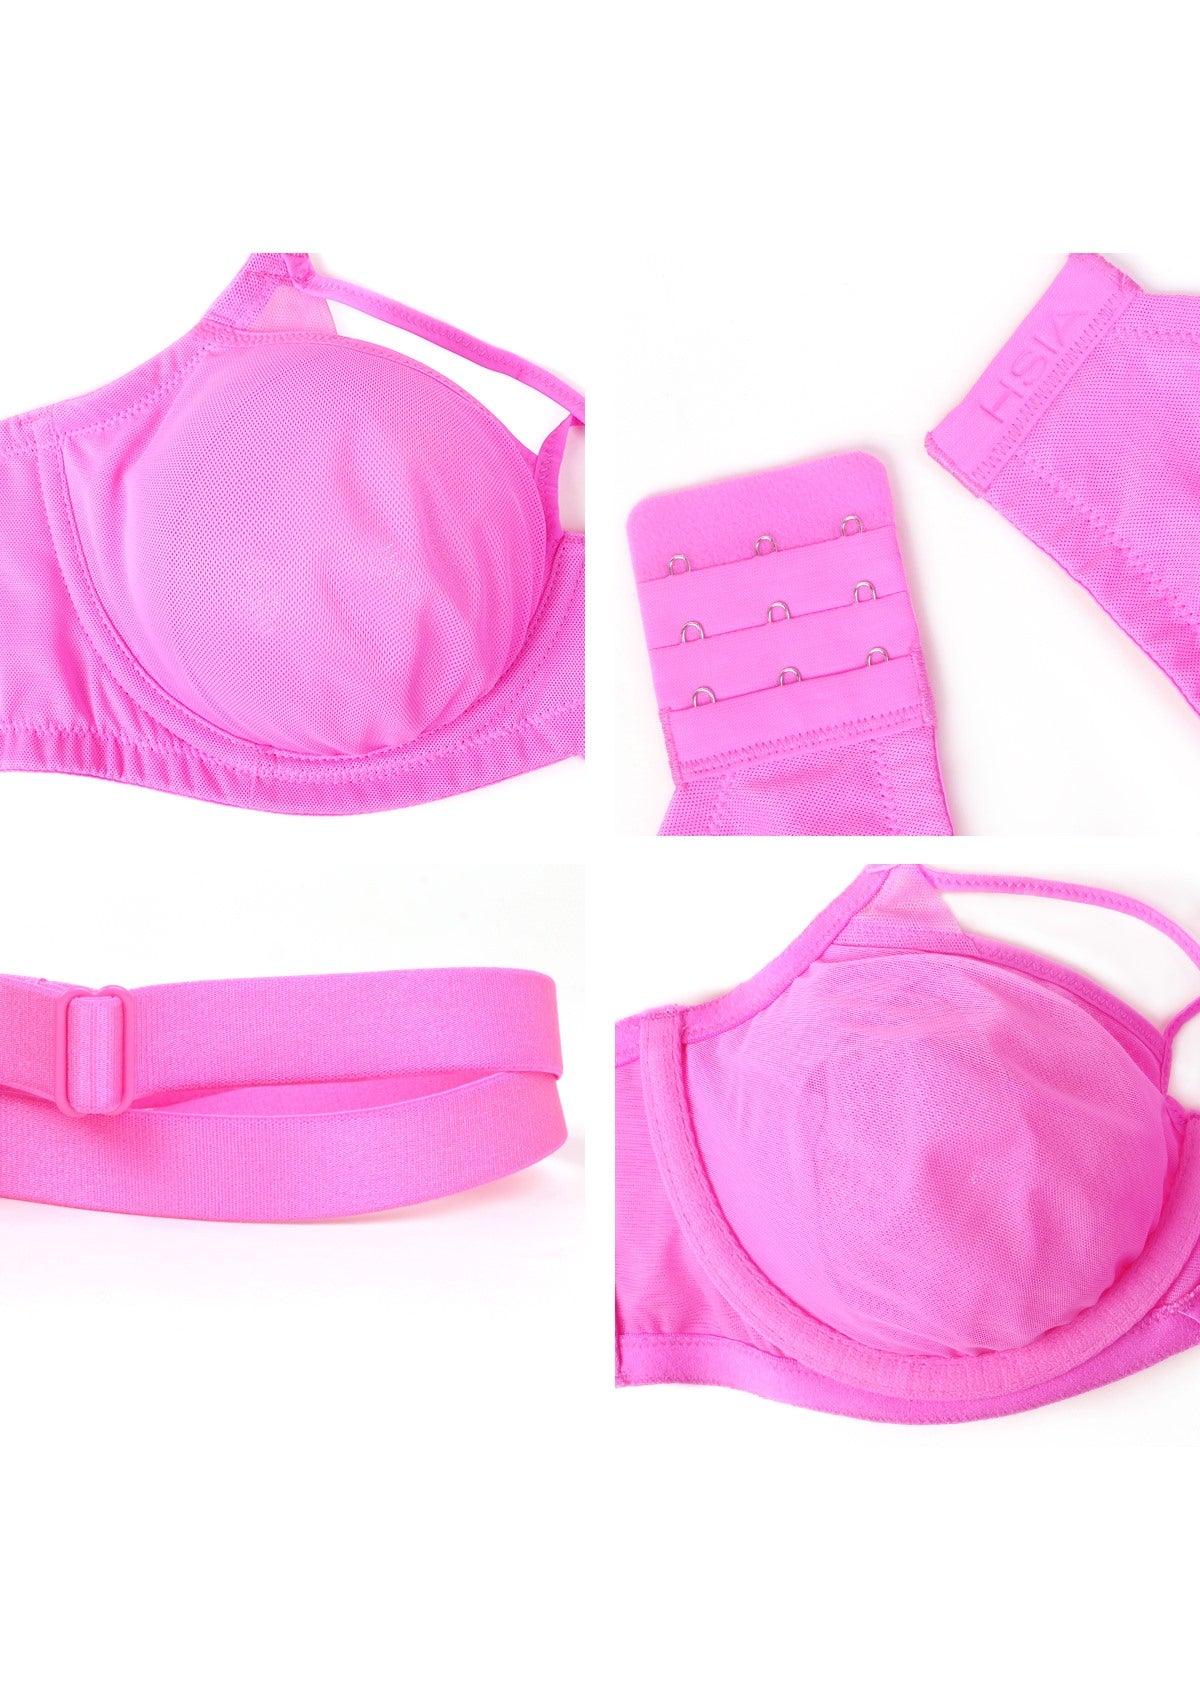 HSIA Billie Cross Front Strap Smooth Sheer Mesh Comfy Underwire Bra - Barbie Pink / 38 / G